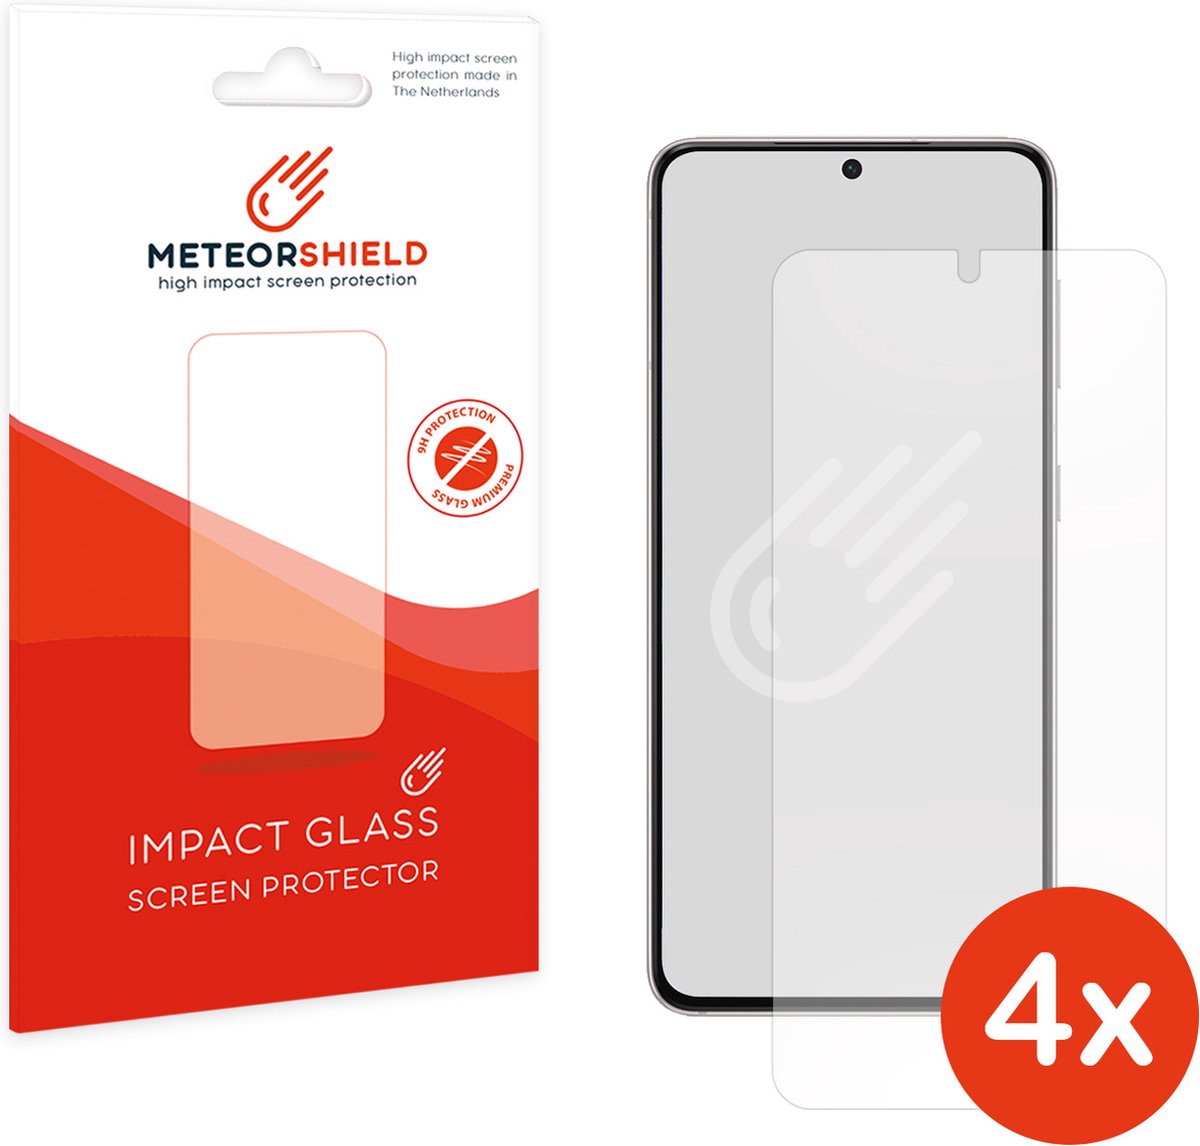 4 stuks: Meteorshield Samsung Galaxy S21 Plus screenprotector - Ultra clear impact glass